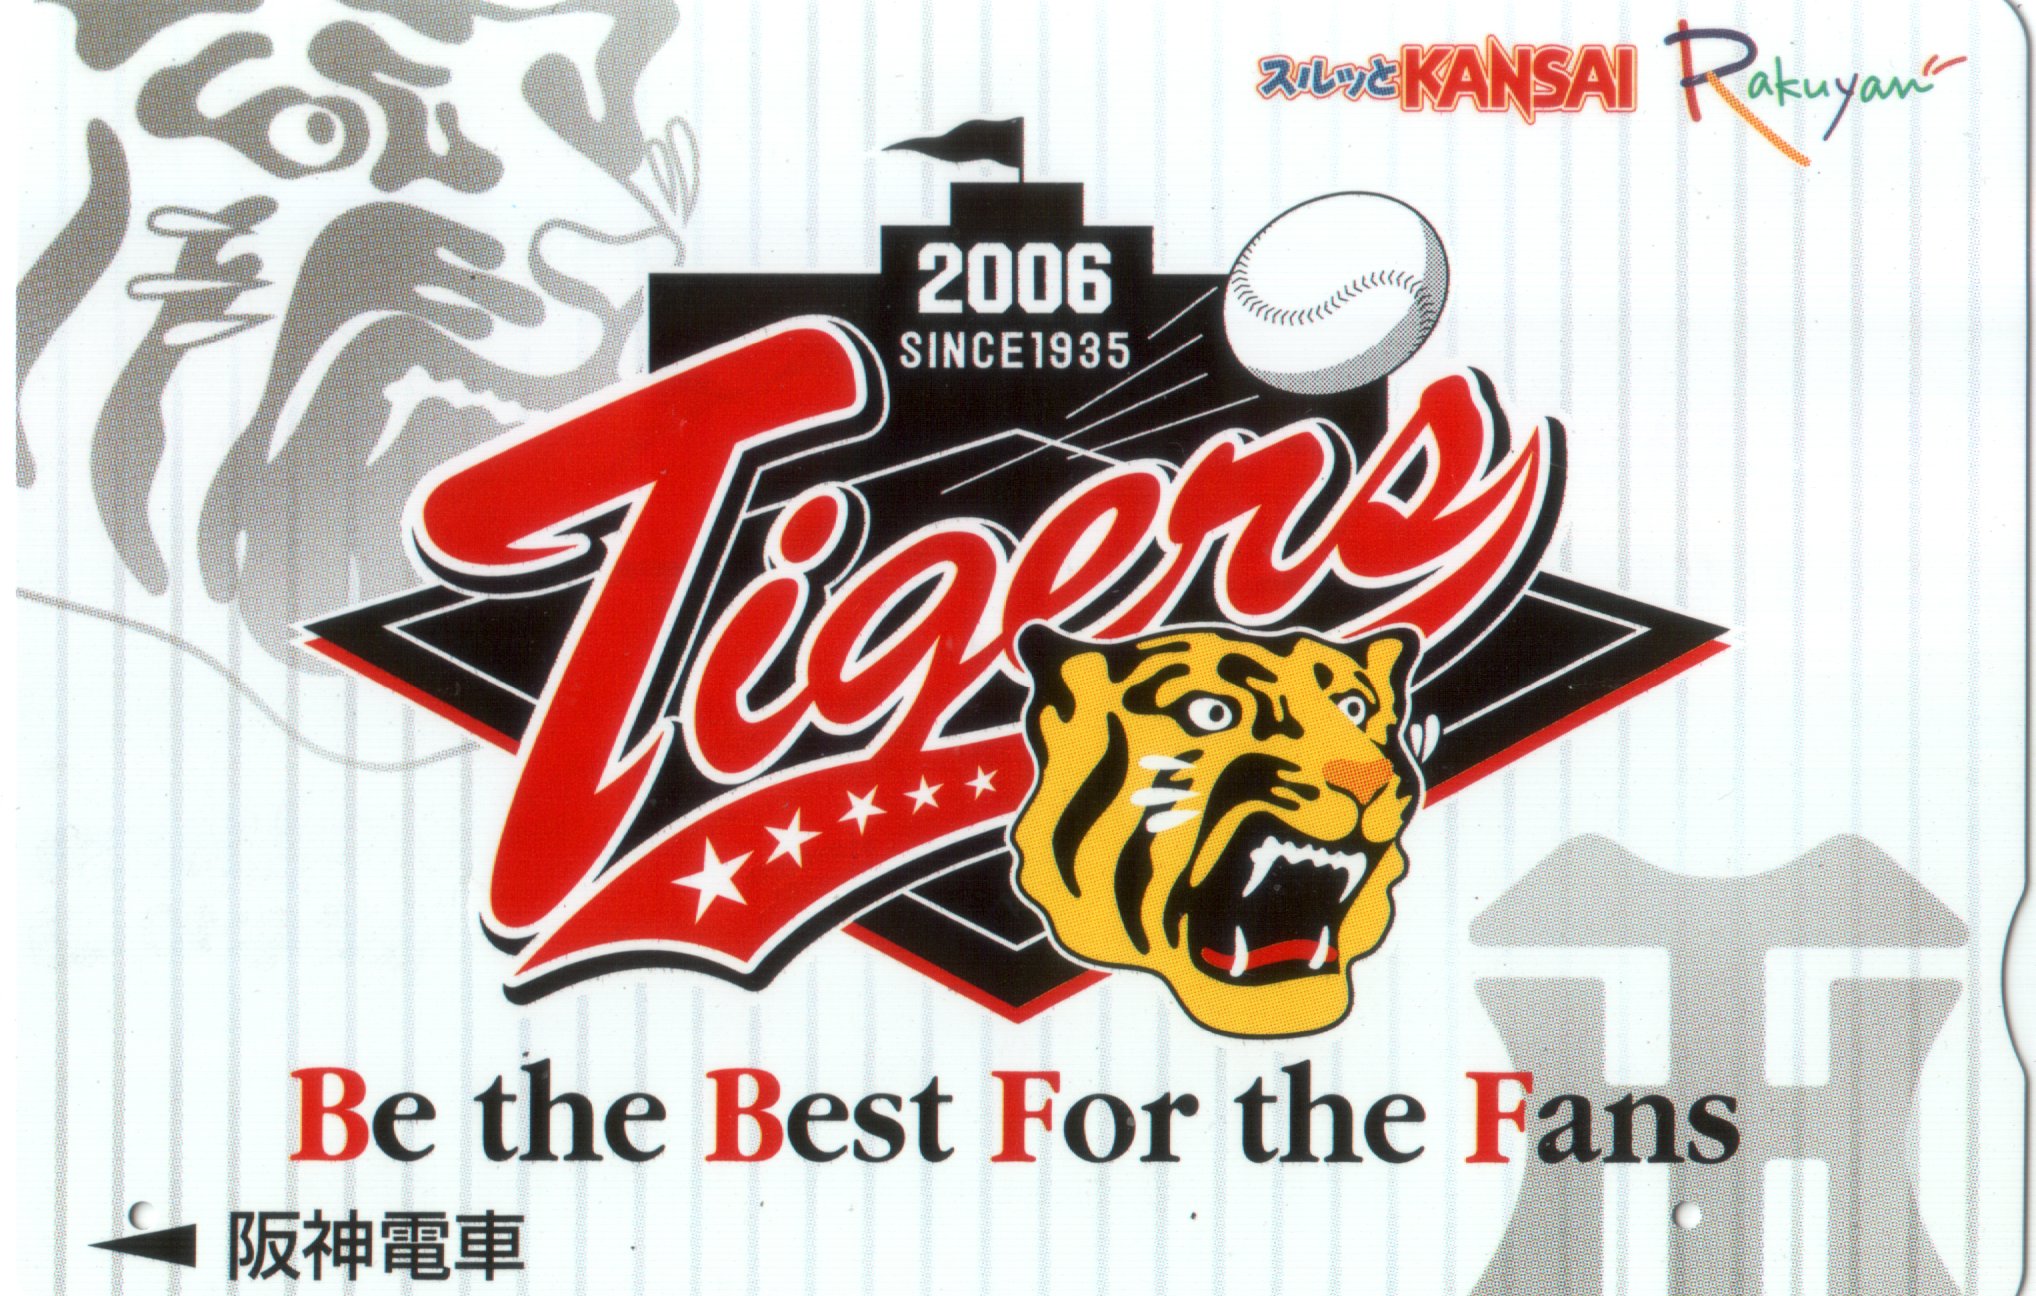 Hanshin Tigers Regular Season 2006